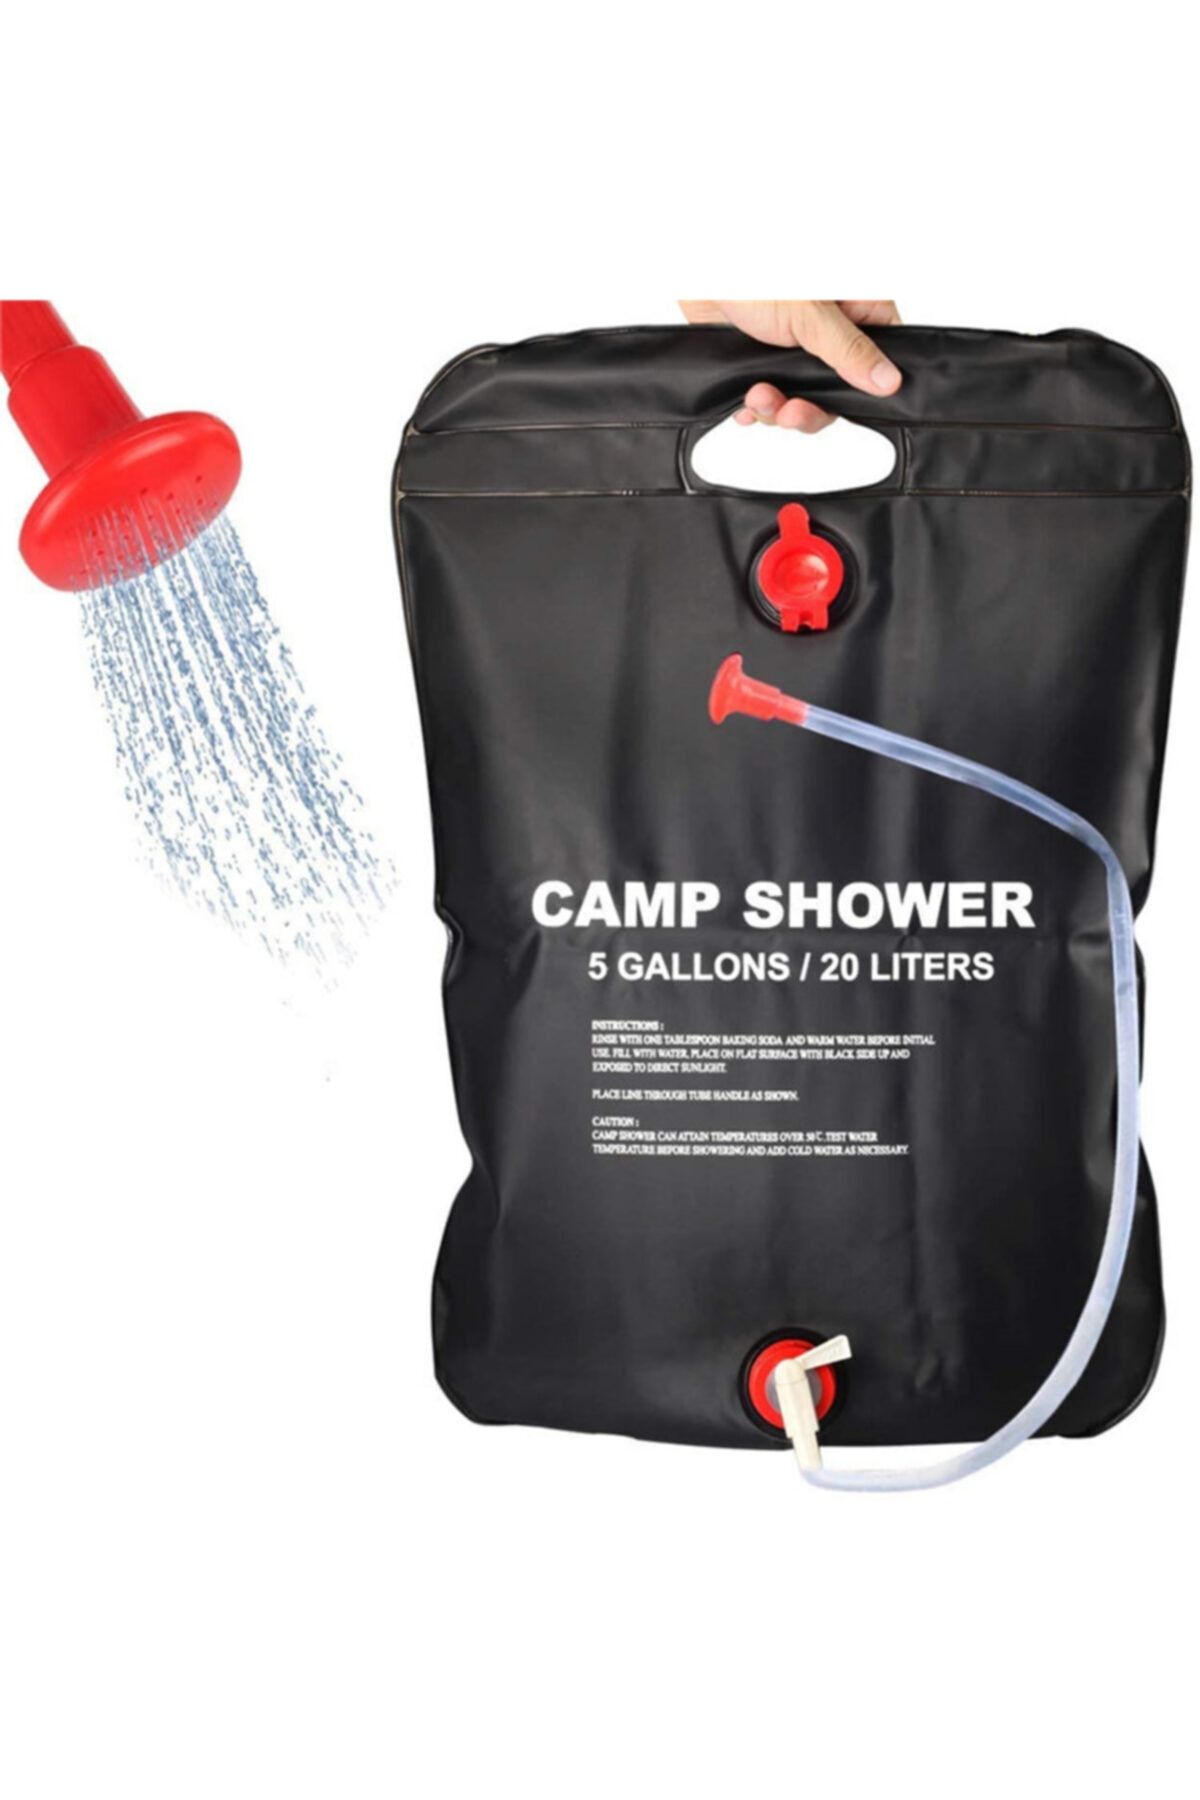 EFSANE KAMP Efsane - Kamp Duşu